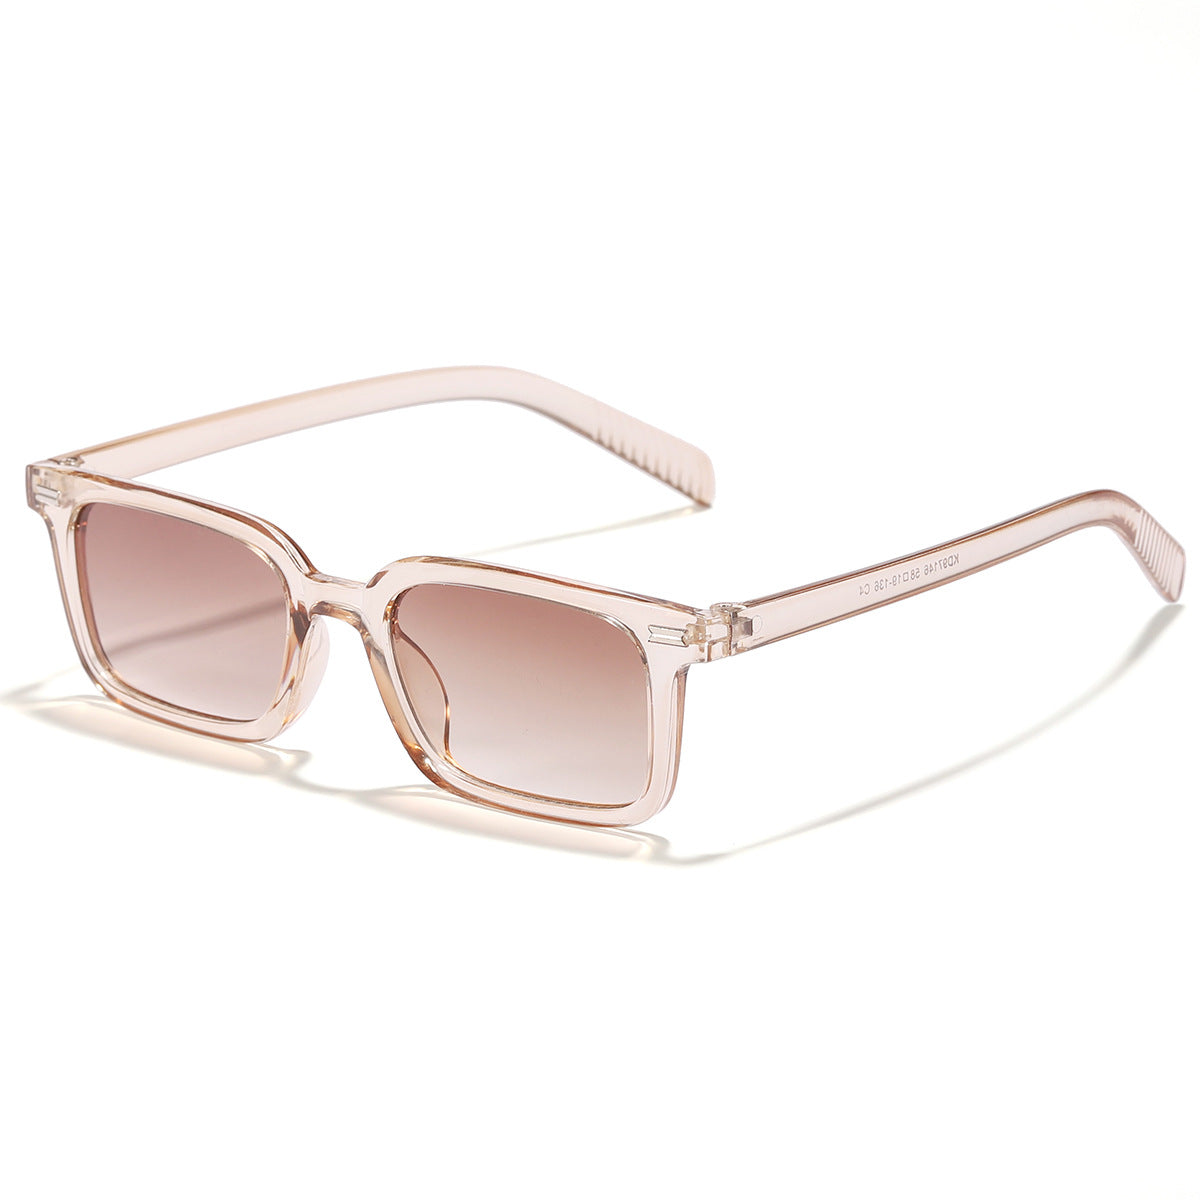 Women's Fashion UV Protection Sunglasses